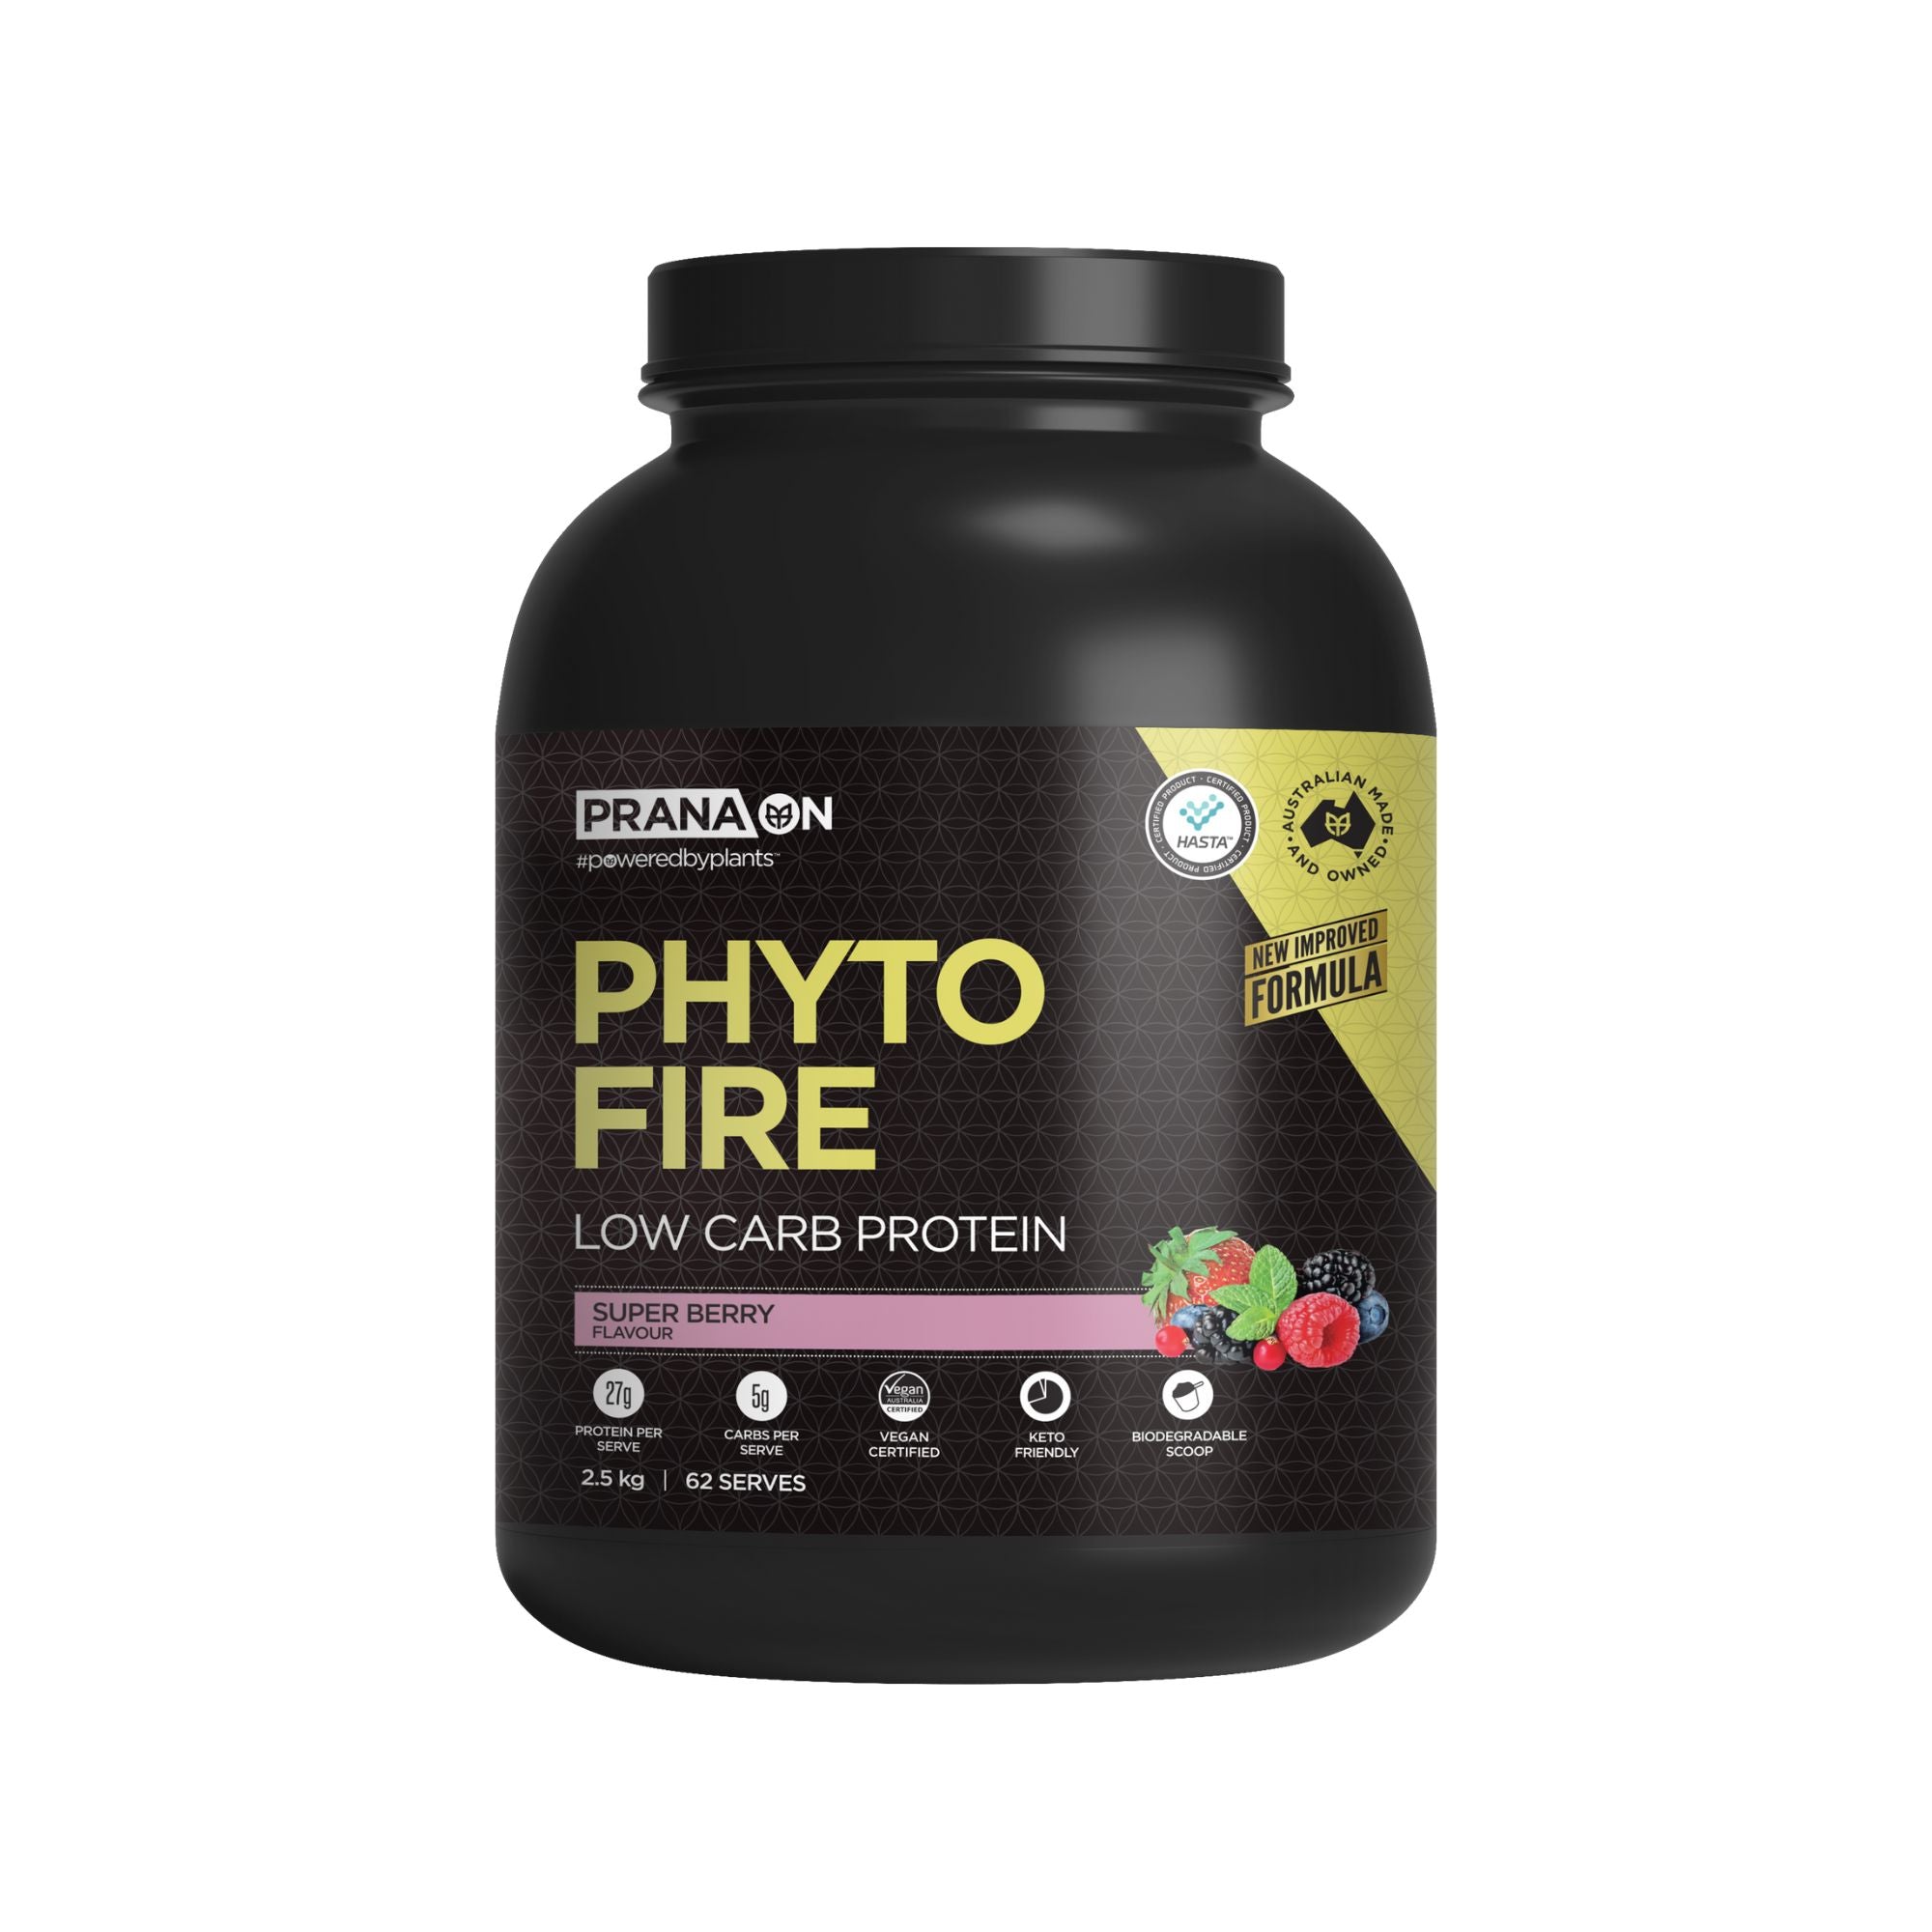 Prana On Phyto Fire 2.5kg - Super Berry